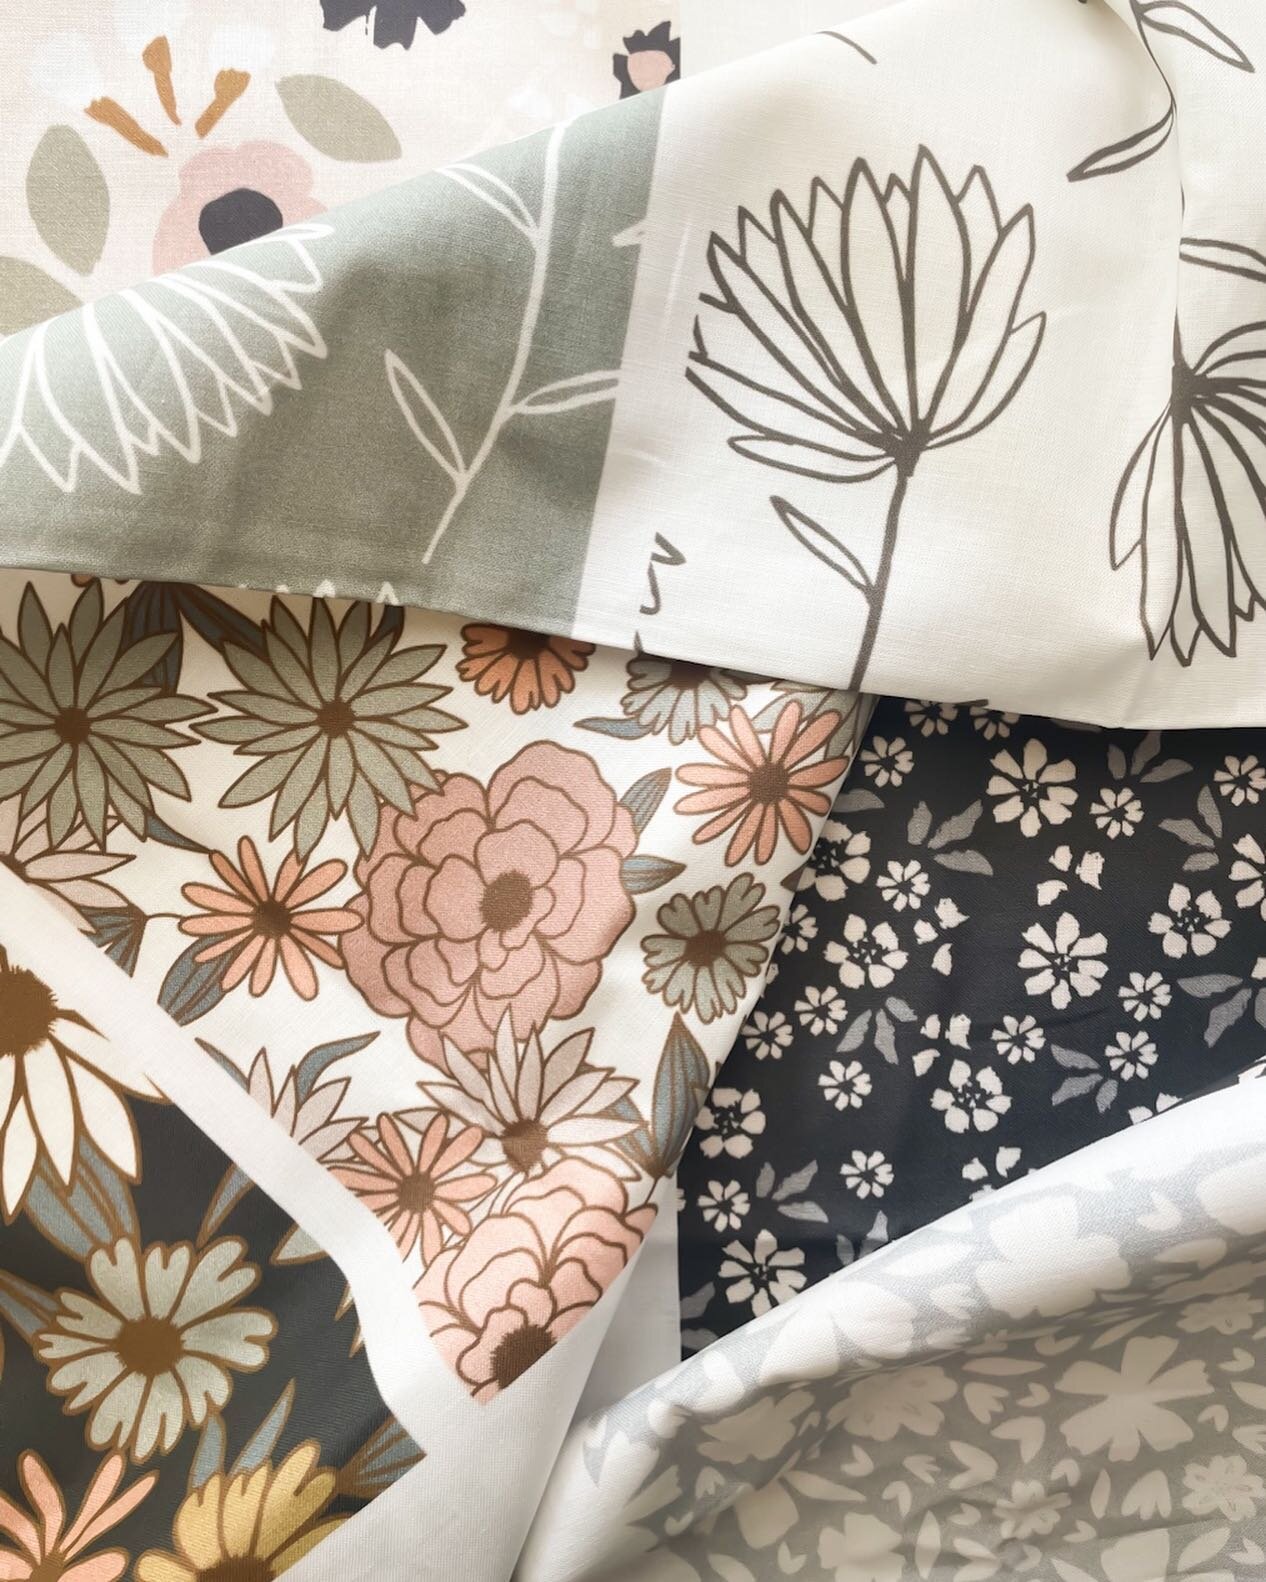 New fabrics now available in my @spoonflower shop💫 I hope you like them ☺️
.
.
.
#spoonflower #spoonflowerdesigner #spoonflowerfabric #fabricdesigner #fabricdesign #fabrics #textiledesign #artistsoninstagram #freelanceartist #freelanceillustrator #i